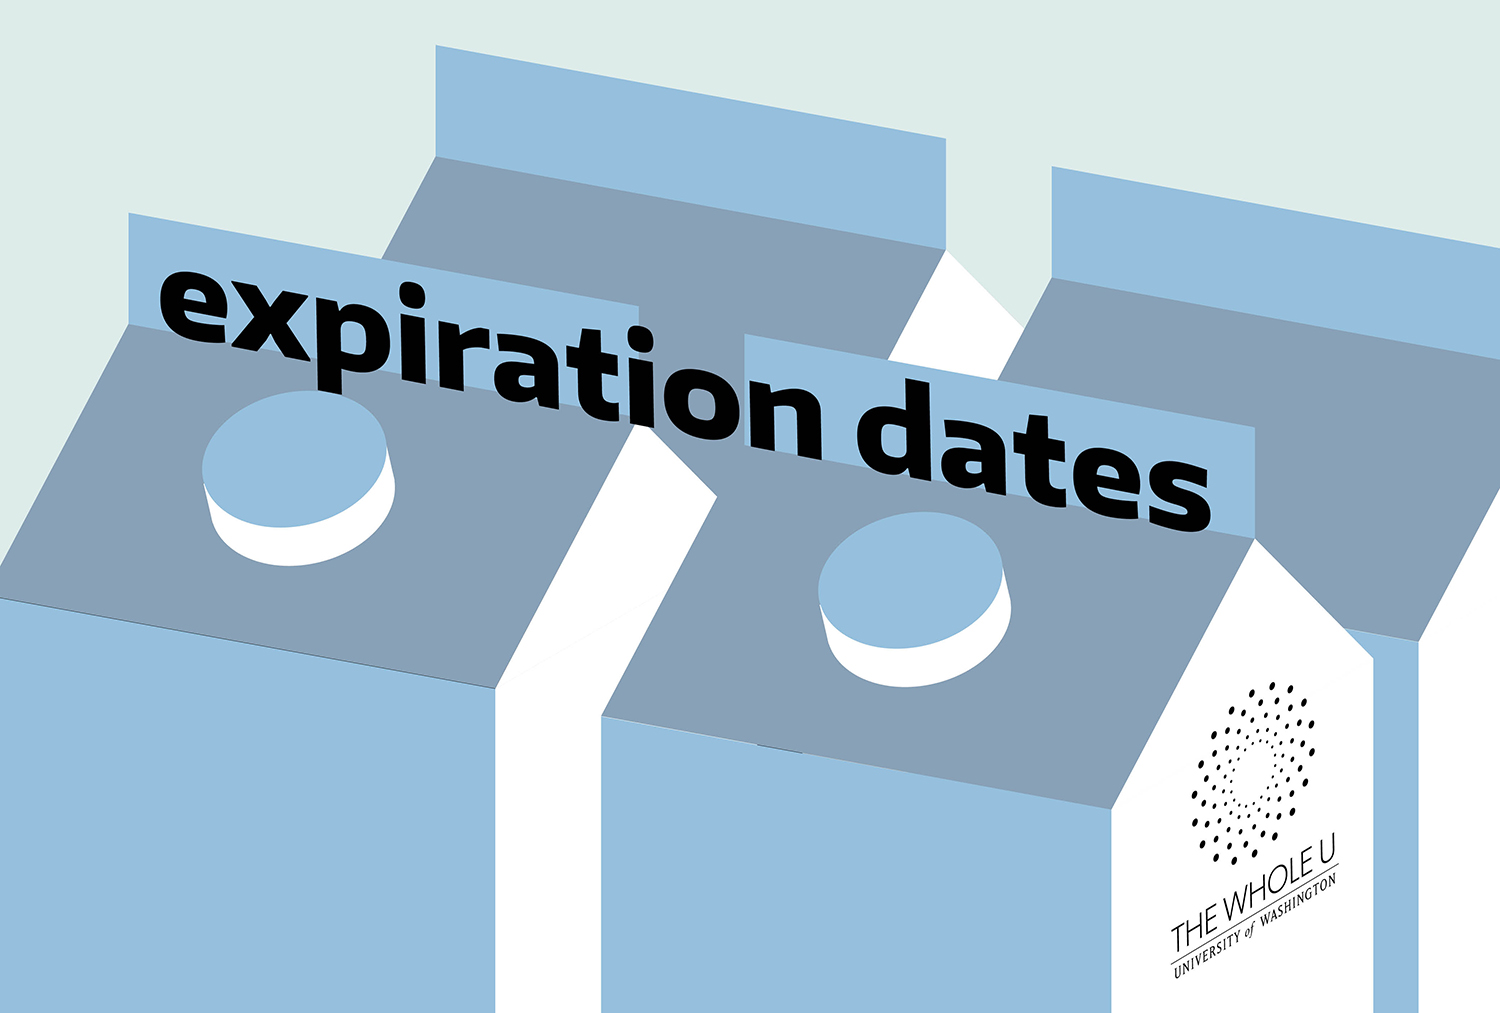 Food Expiration Dates Chart